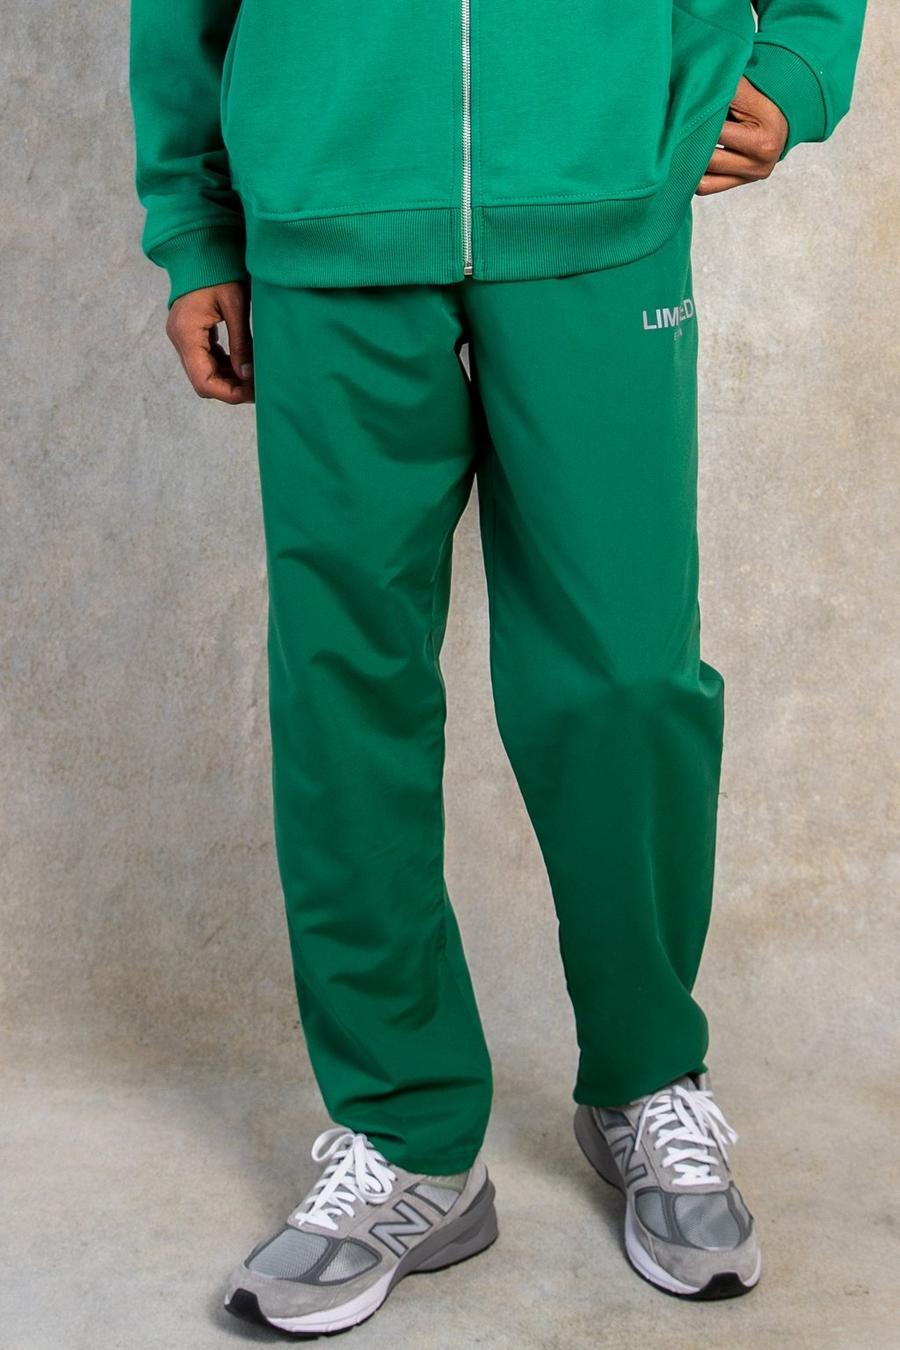 Pantalon droit style cargo - Limited Edition, Green